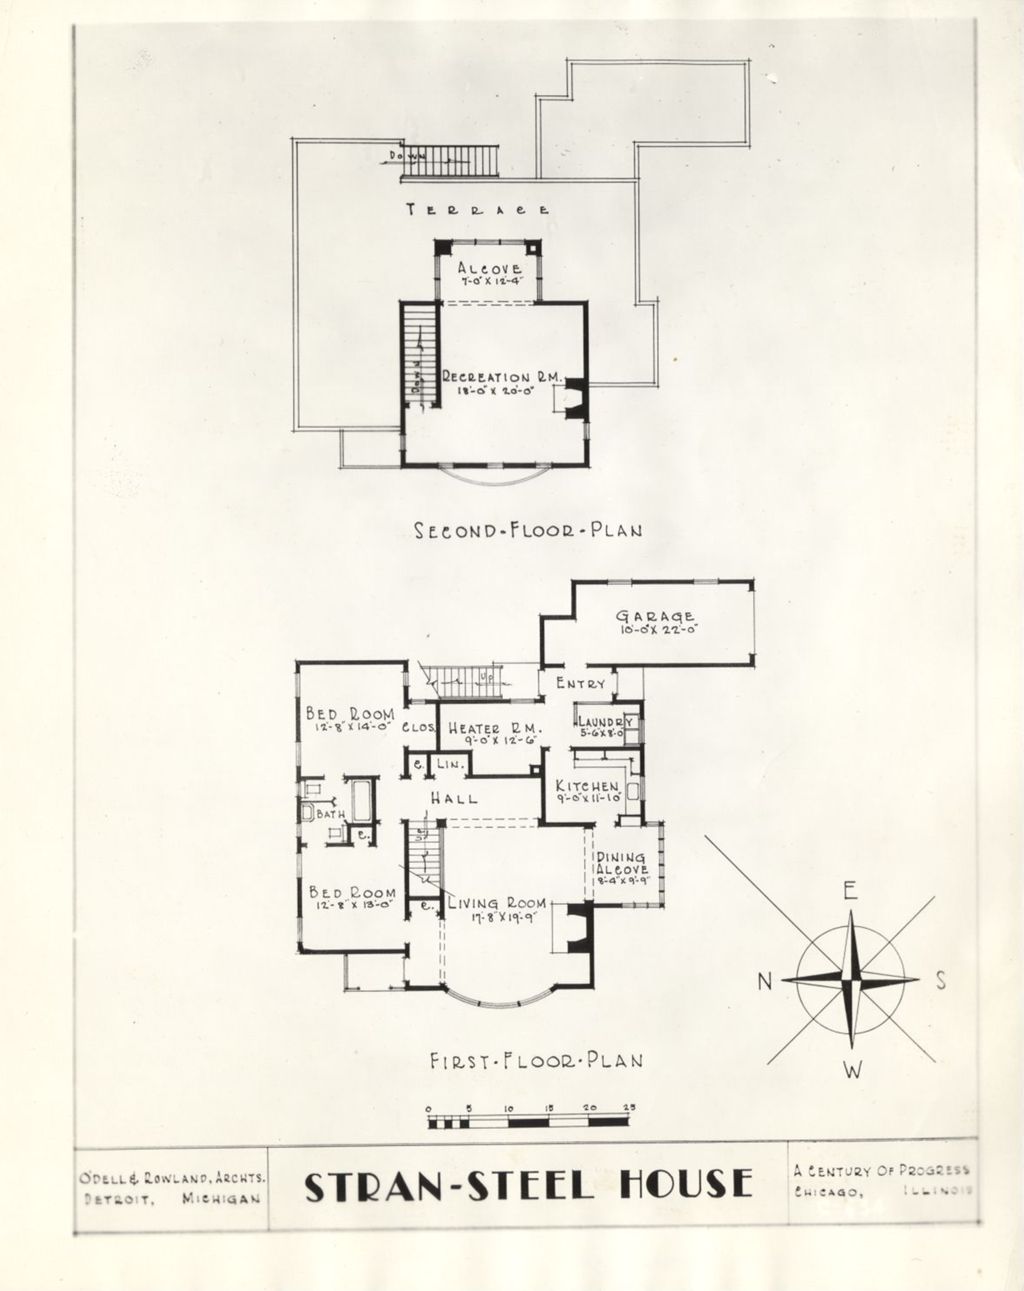 Miniature of Floor plan for the Stran-Steel House exhibit